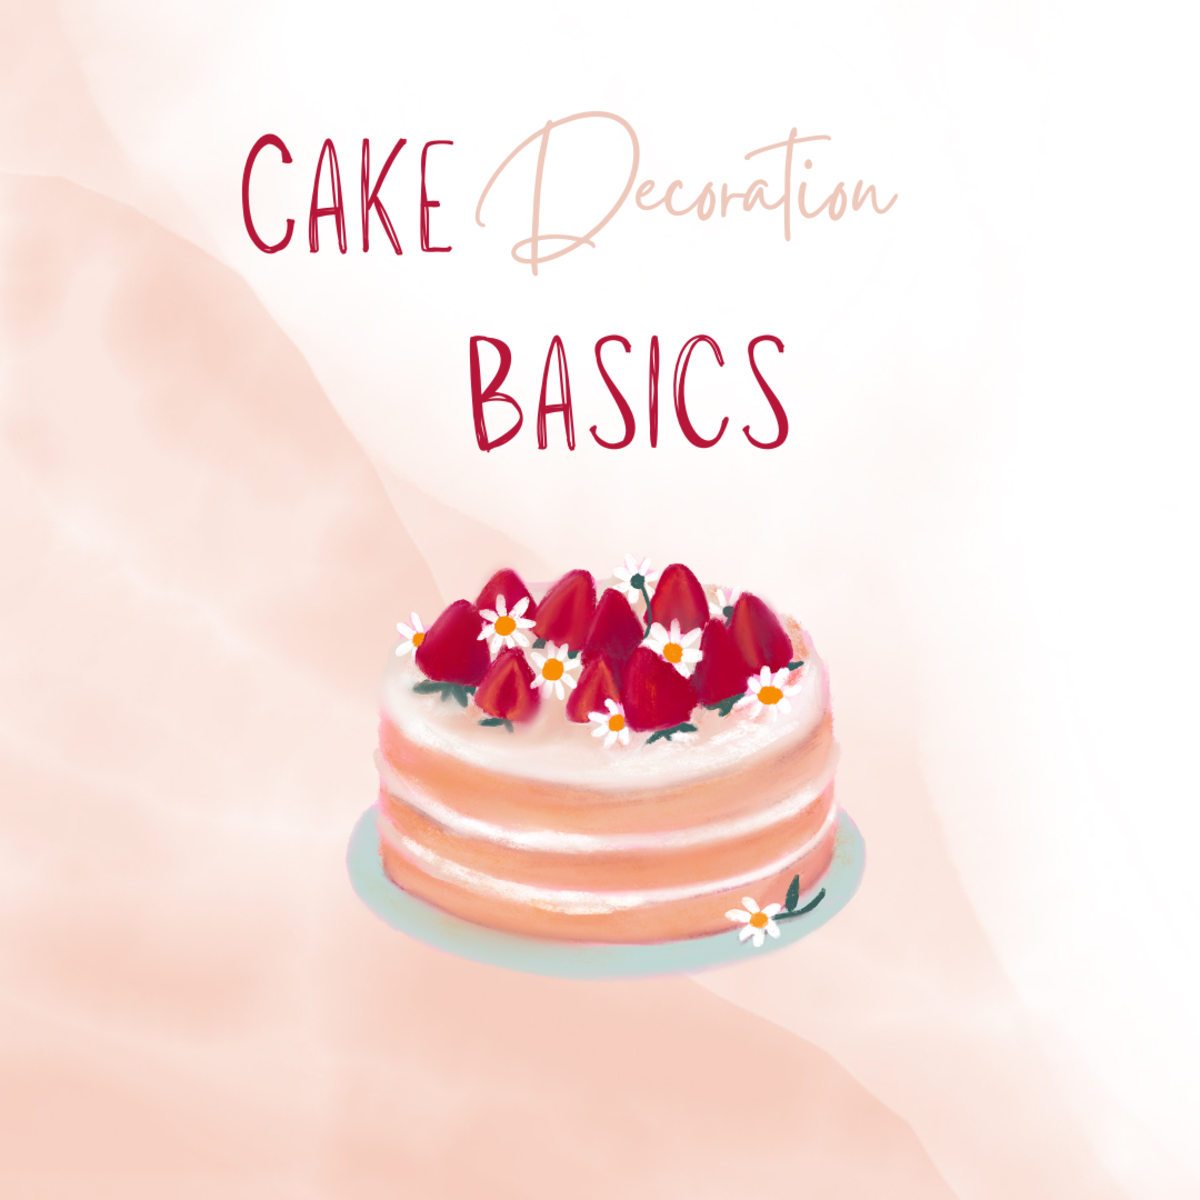 Cake Decorating Basics: How to Torte Your Cake